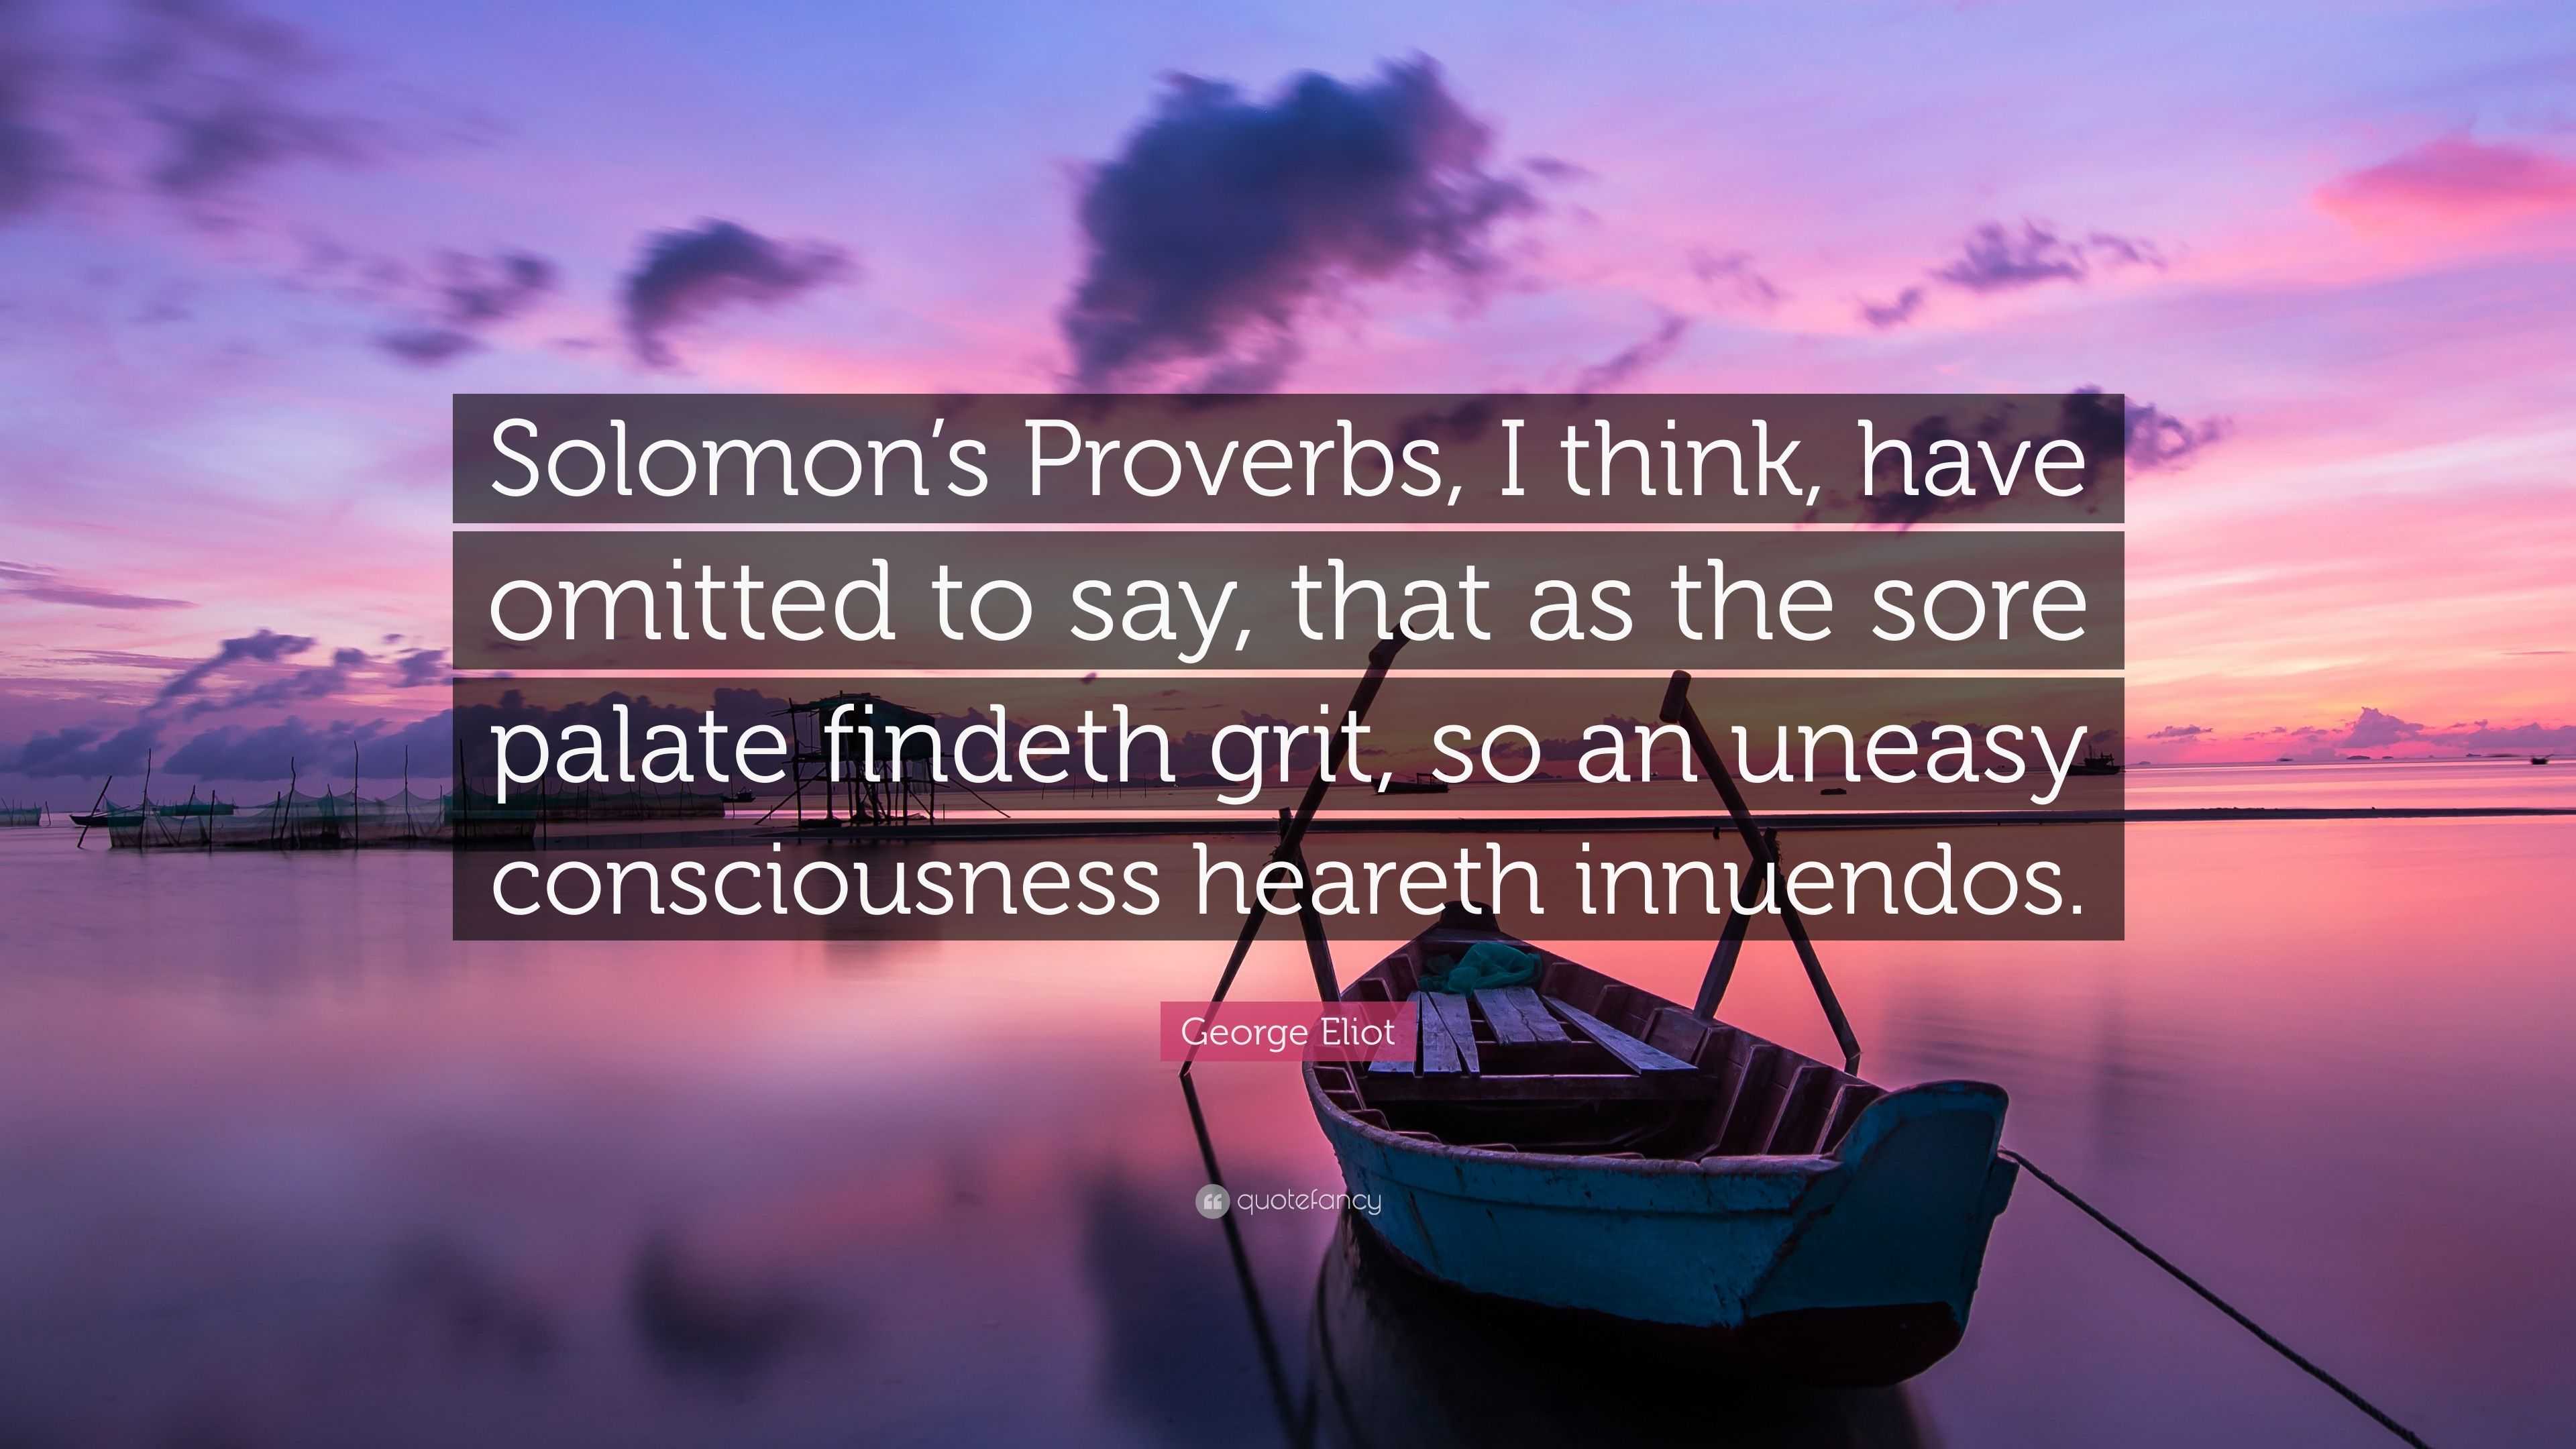 Proverbs of solomon quotes